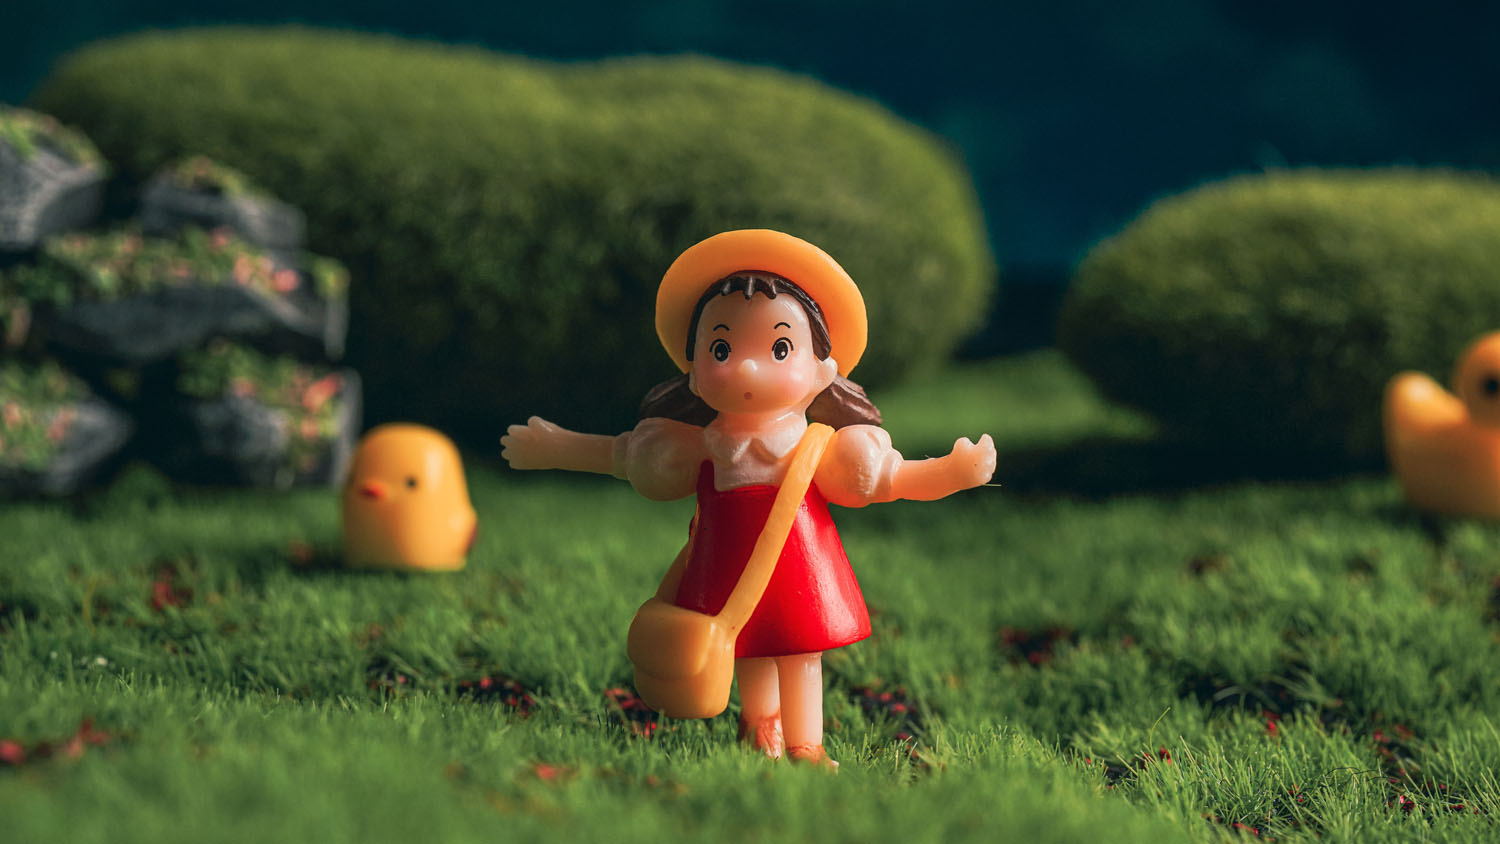 A Studio Ghibli Mei Kusakabe figurine on grass